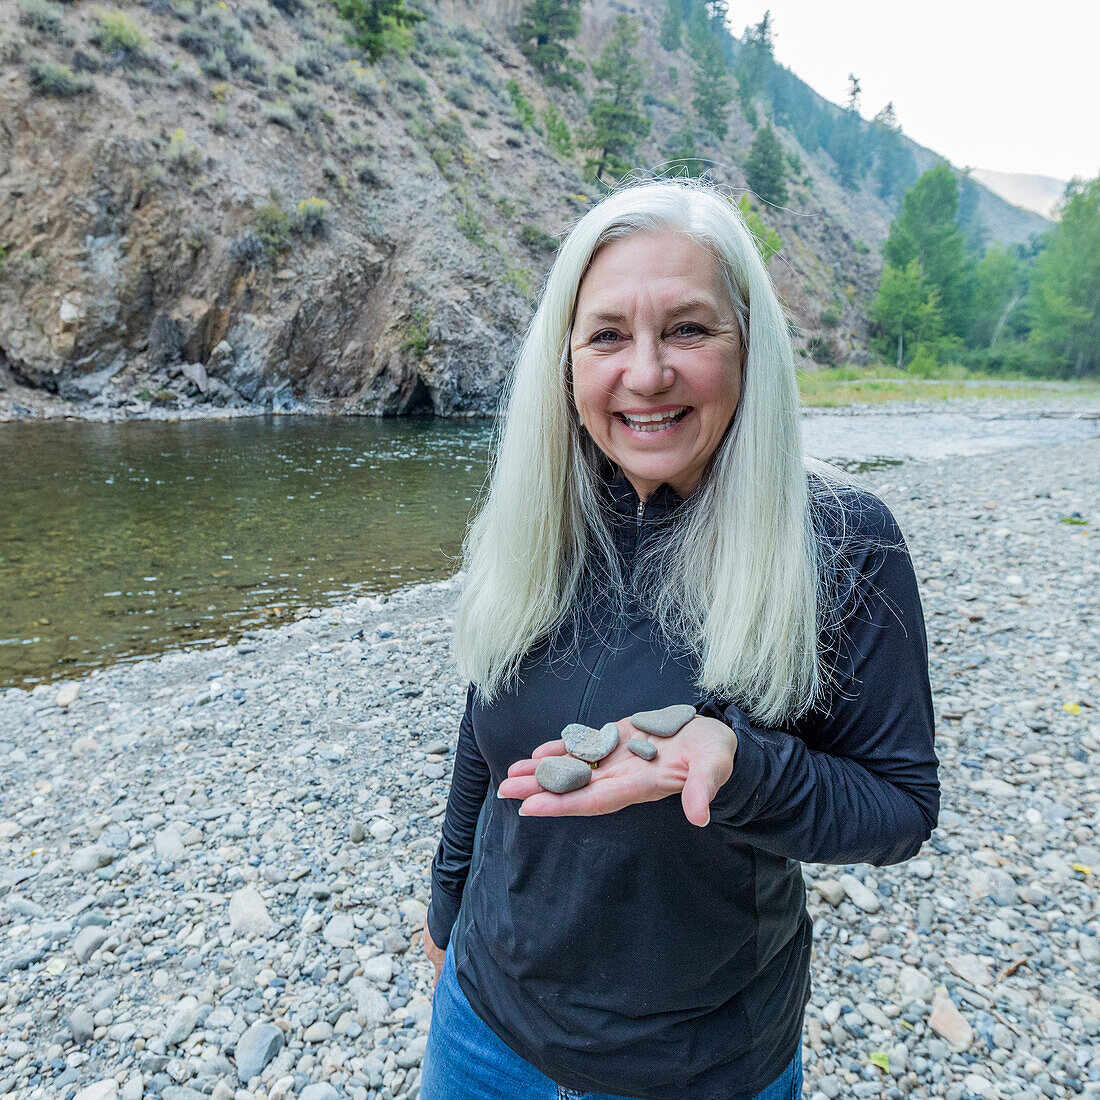 USA, Idaho, Hailey, Portrait of smiling woman holding heart shaped river rocks at Big Wood River